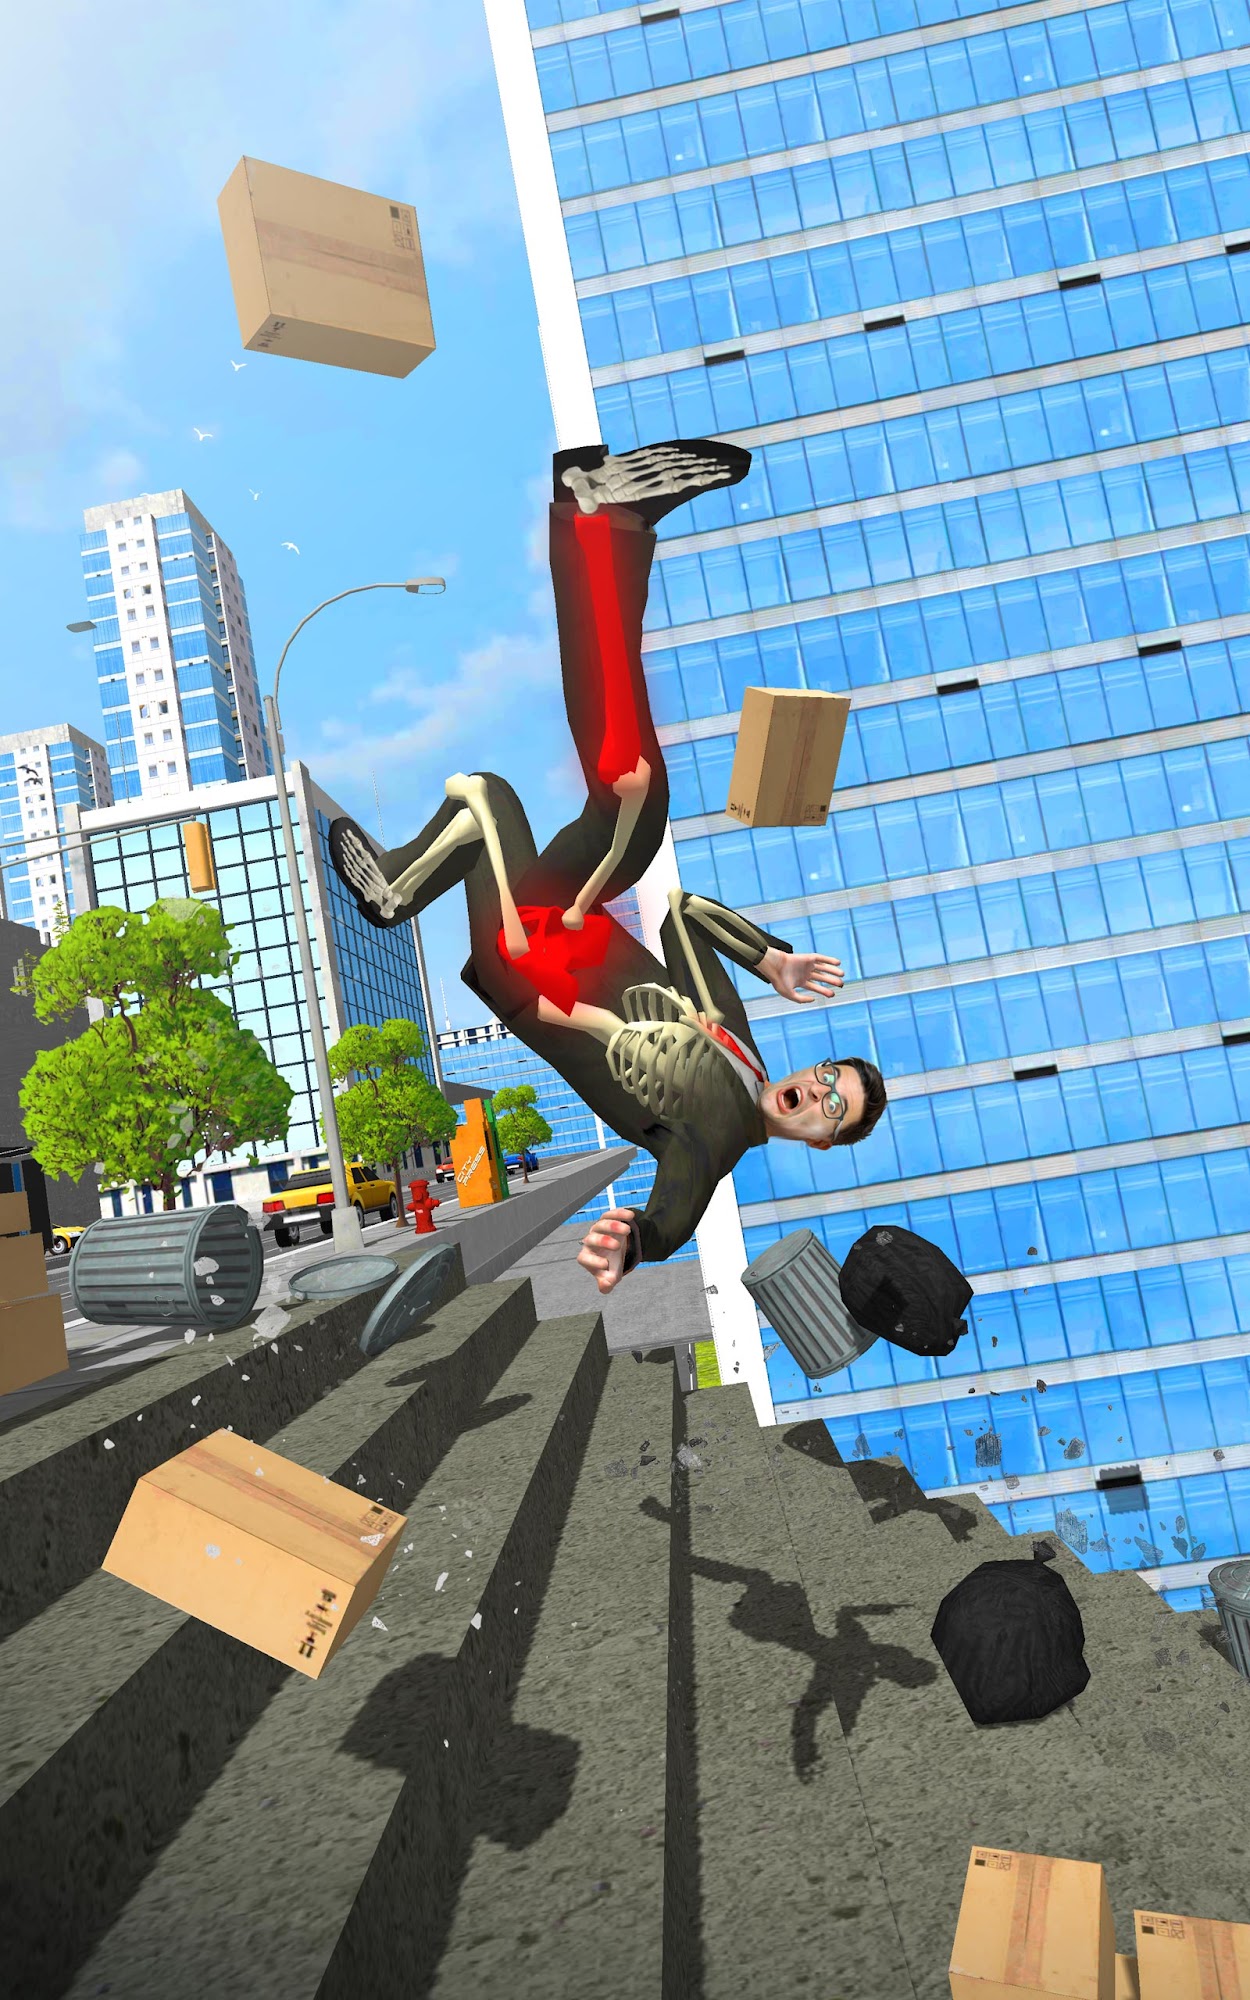 Falling Art Ragdoll Simulator - Android game screenshots.